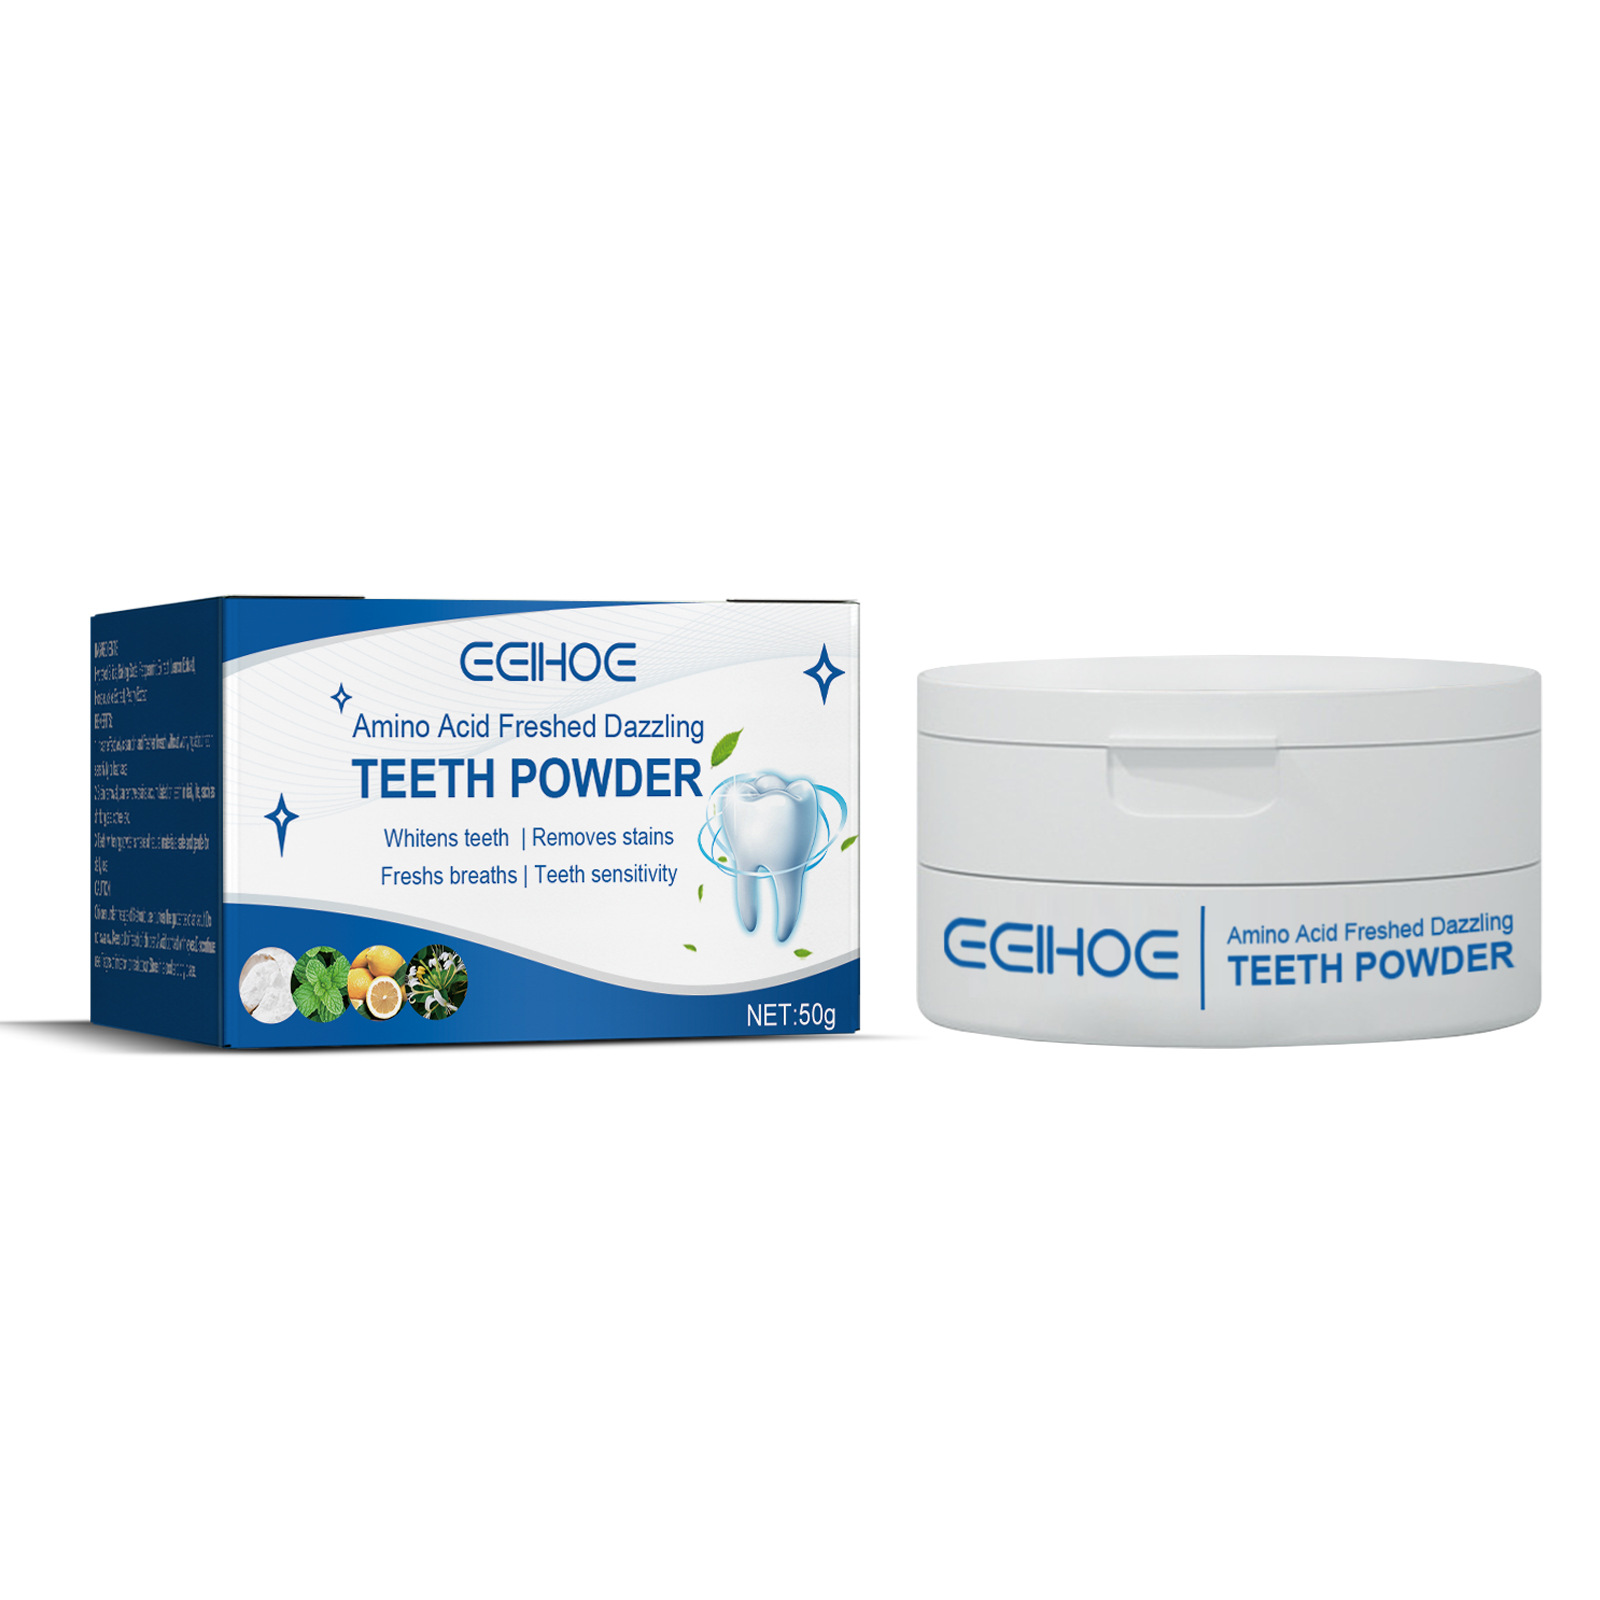 Eelhoe Teeth Dazzling White Powder Cleaning Oral Teeth Tartar Teeth Yellow Teeth Stains Gum Care Whitening Beauty Toothpowder